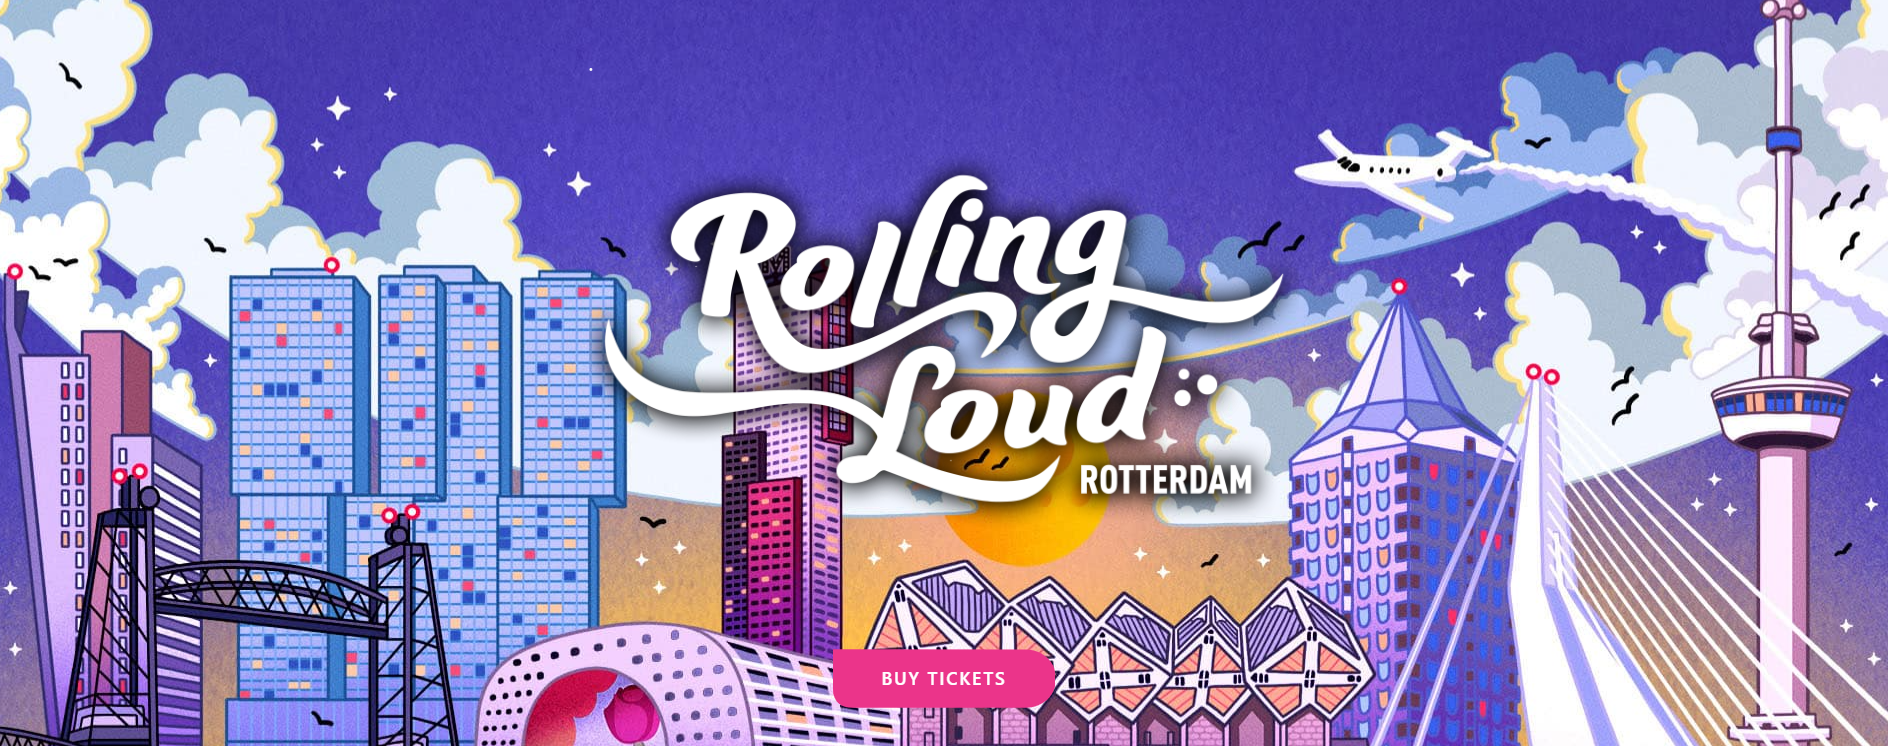 Rolling Loud Rotterdam